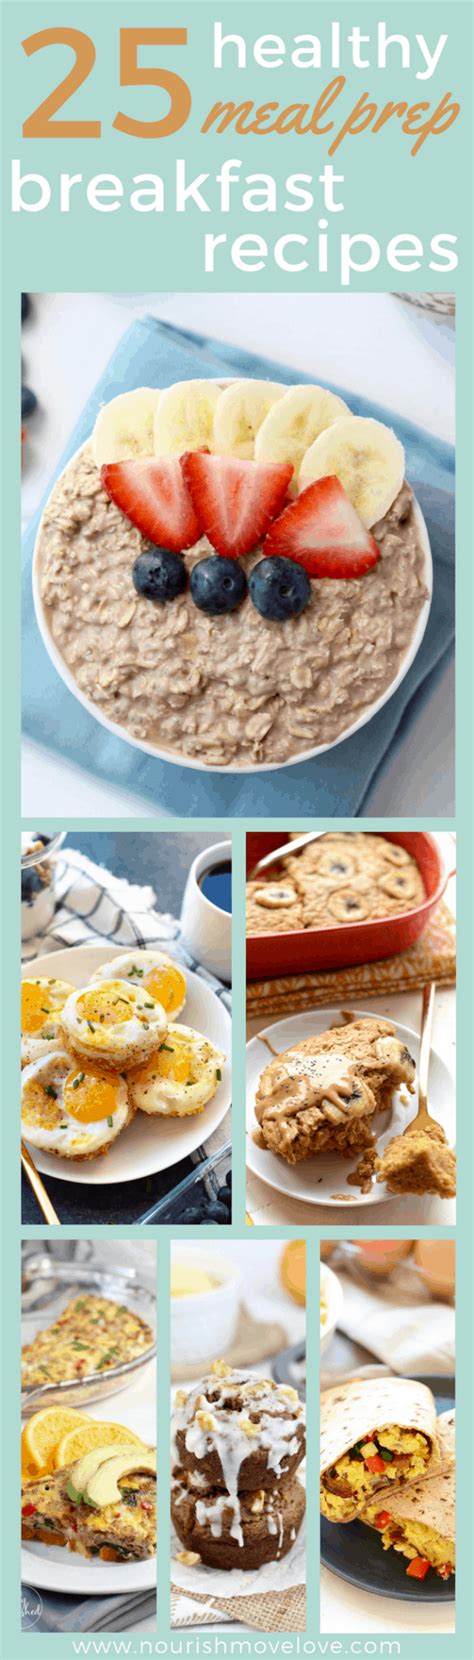 25 Healthy Meal Prep Breakfast Recipes Nourish Move Love